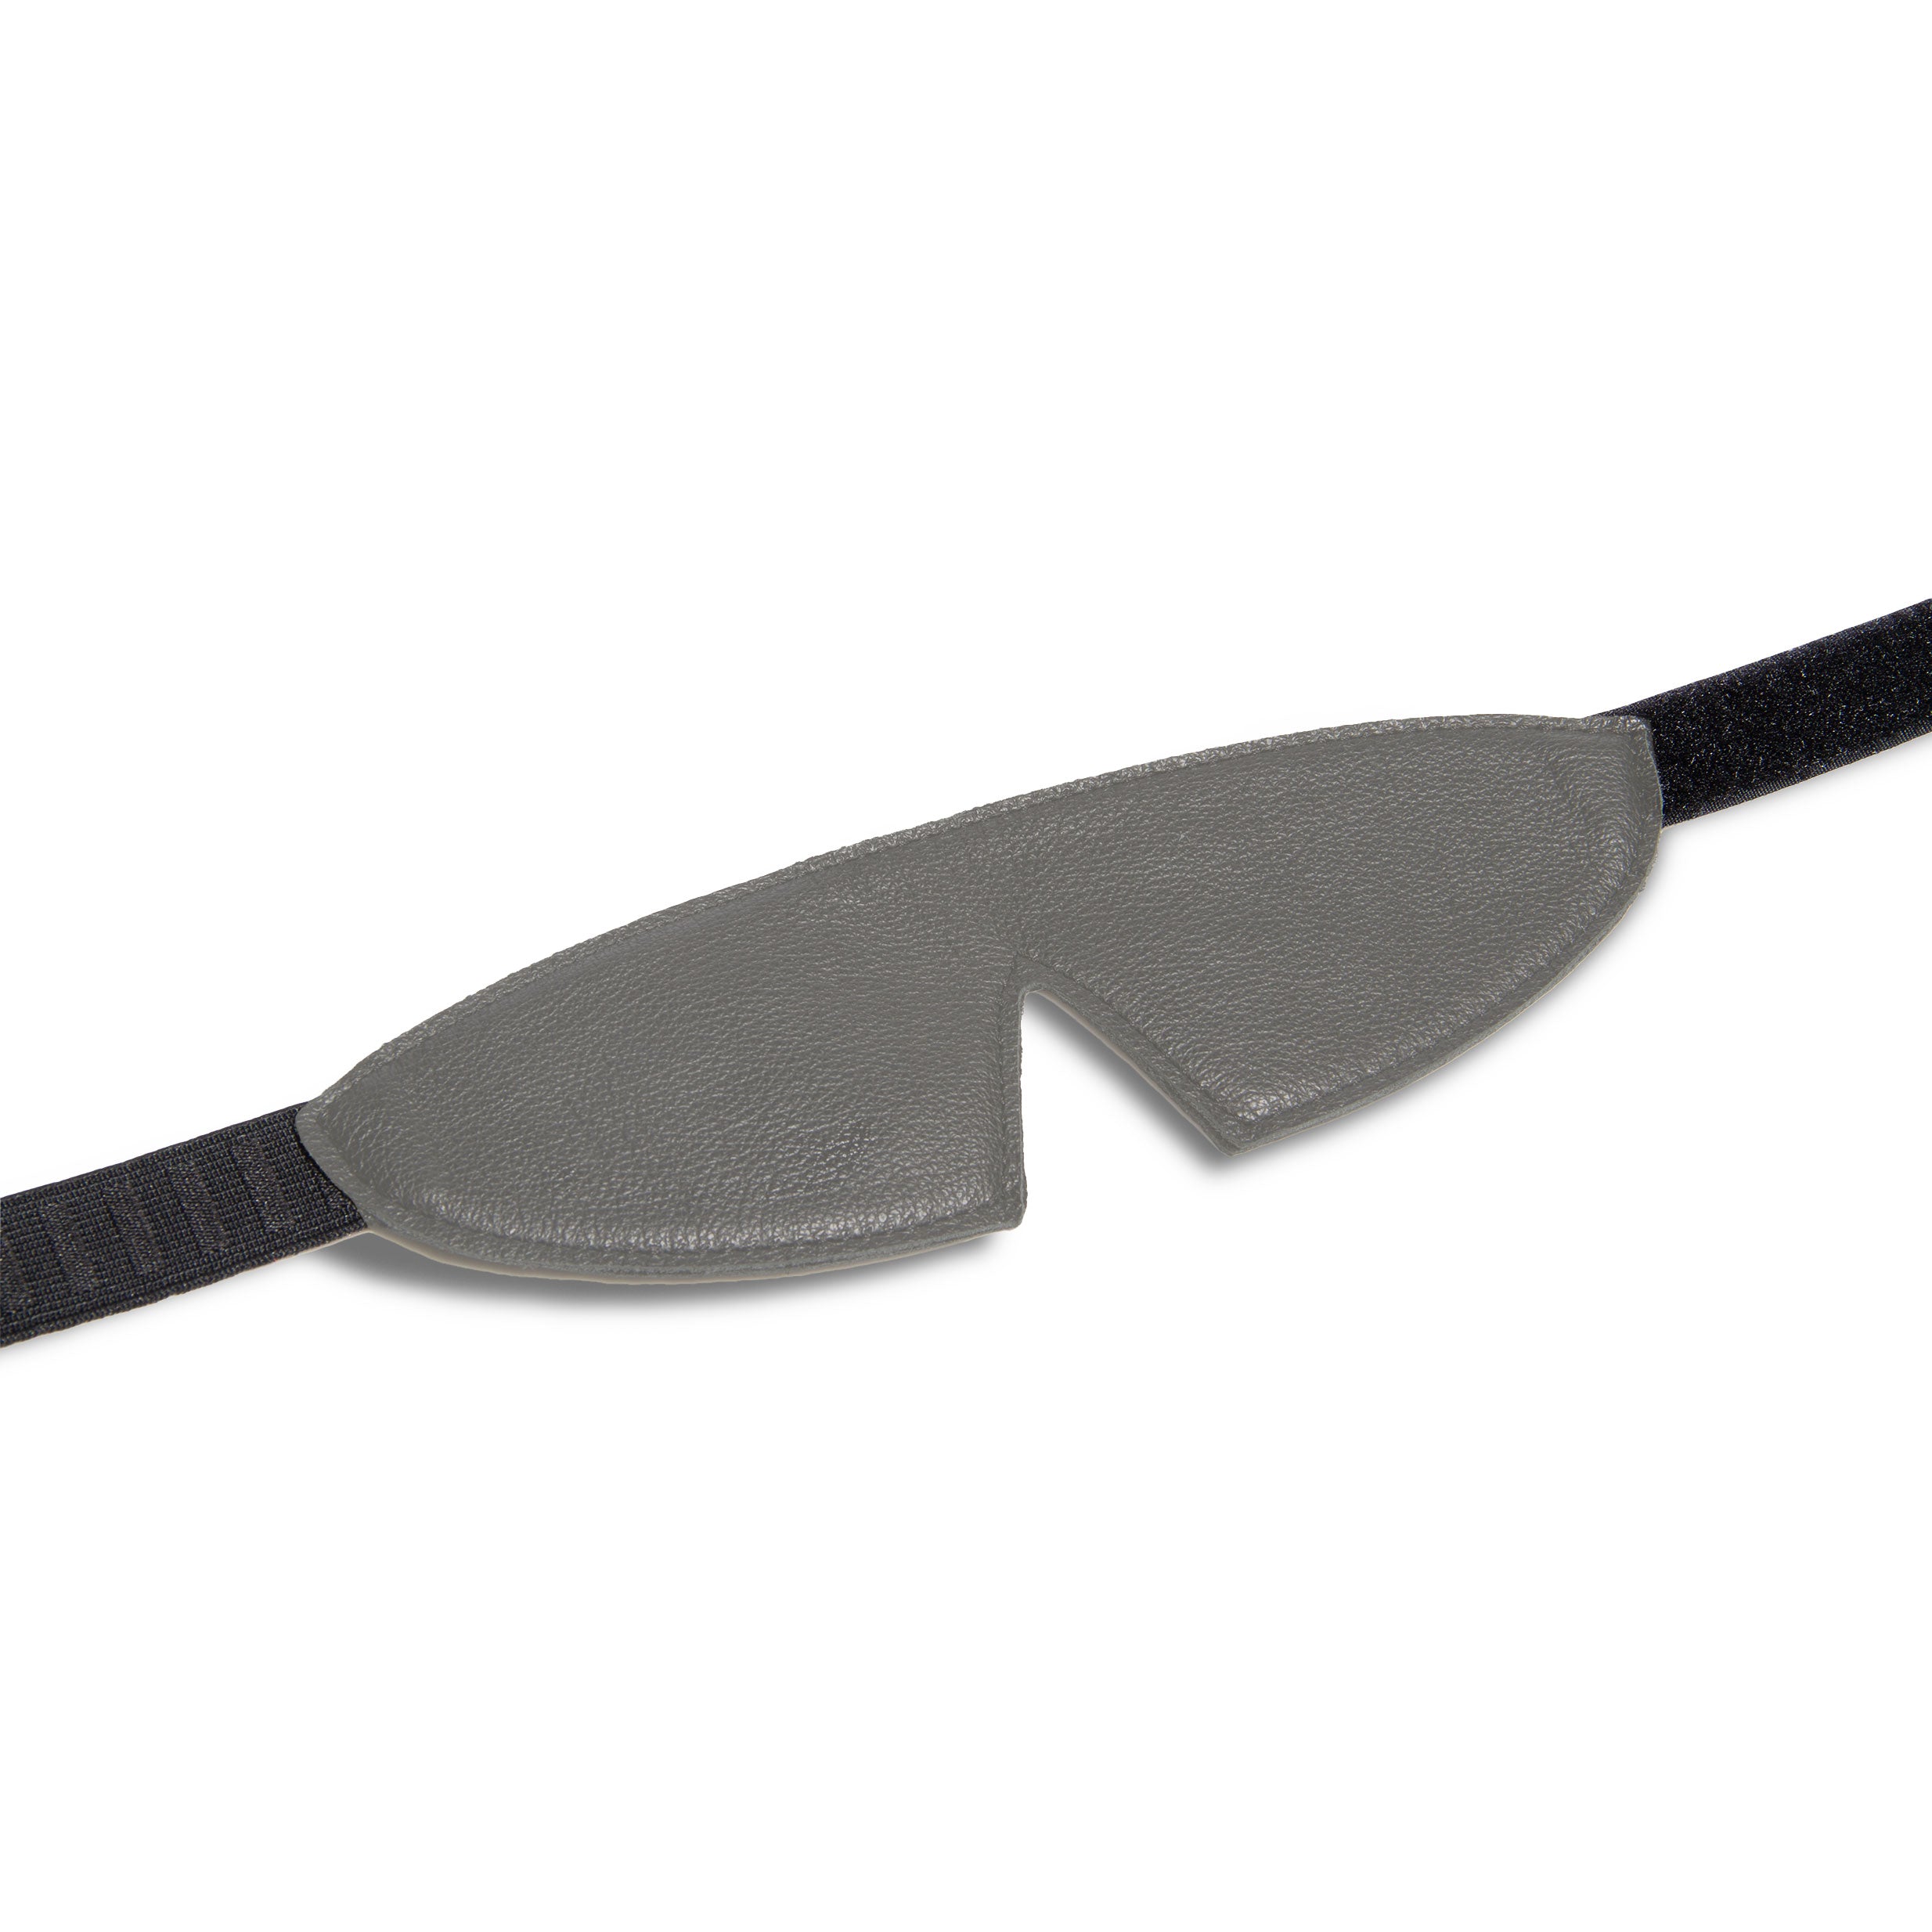 Grey Leather BDSM Eye Mask with Velcro Closure